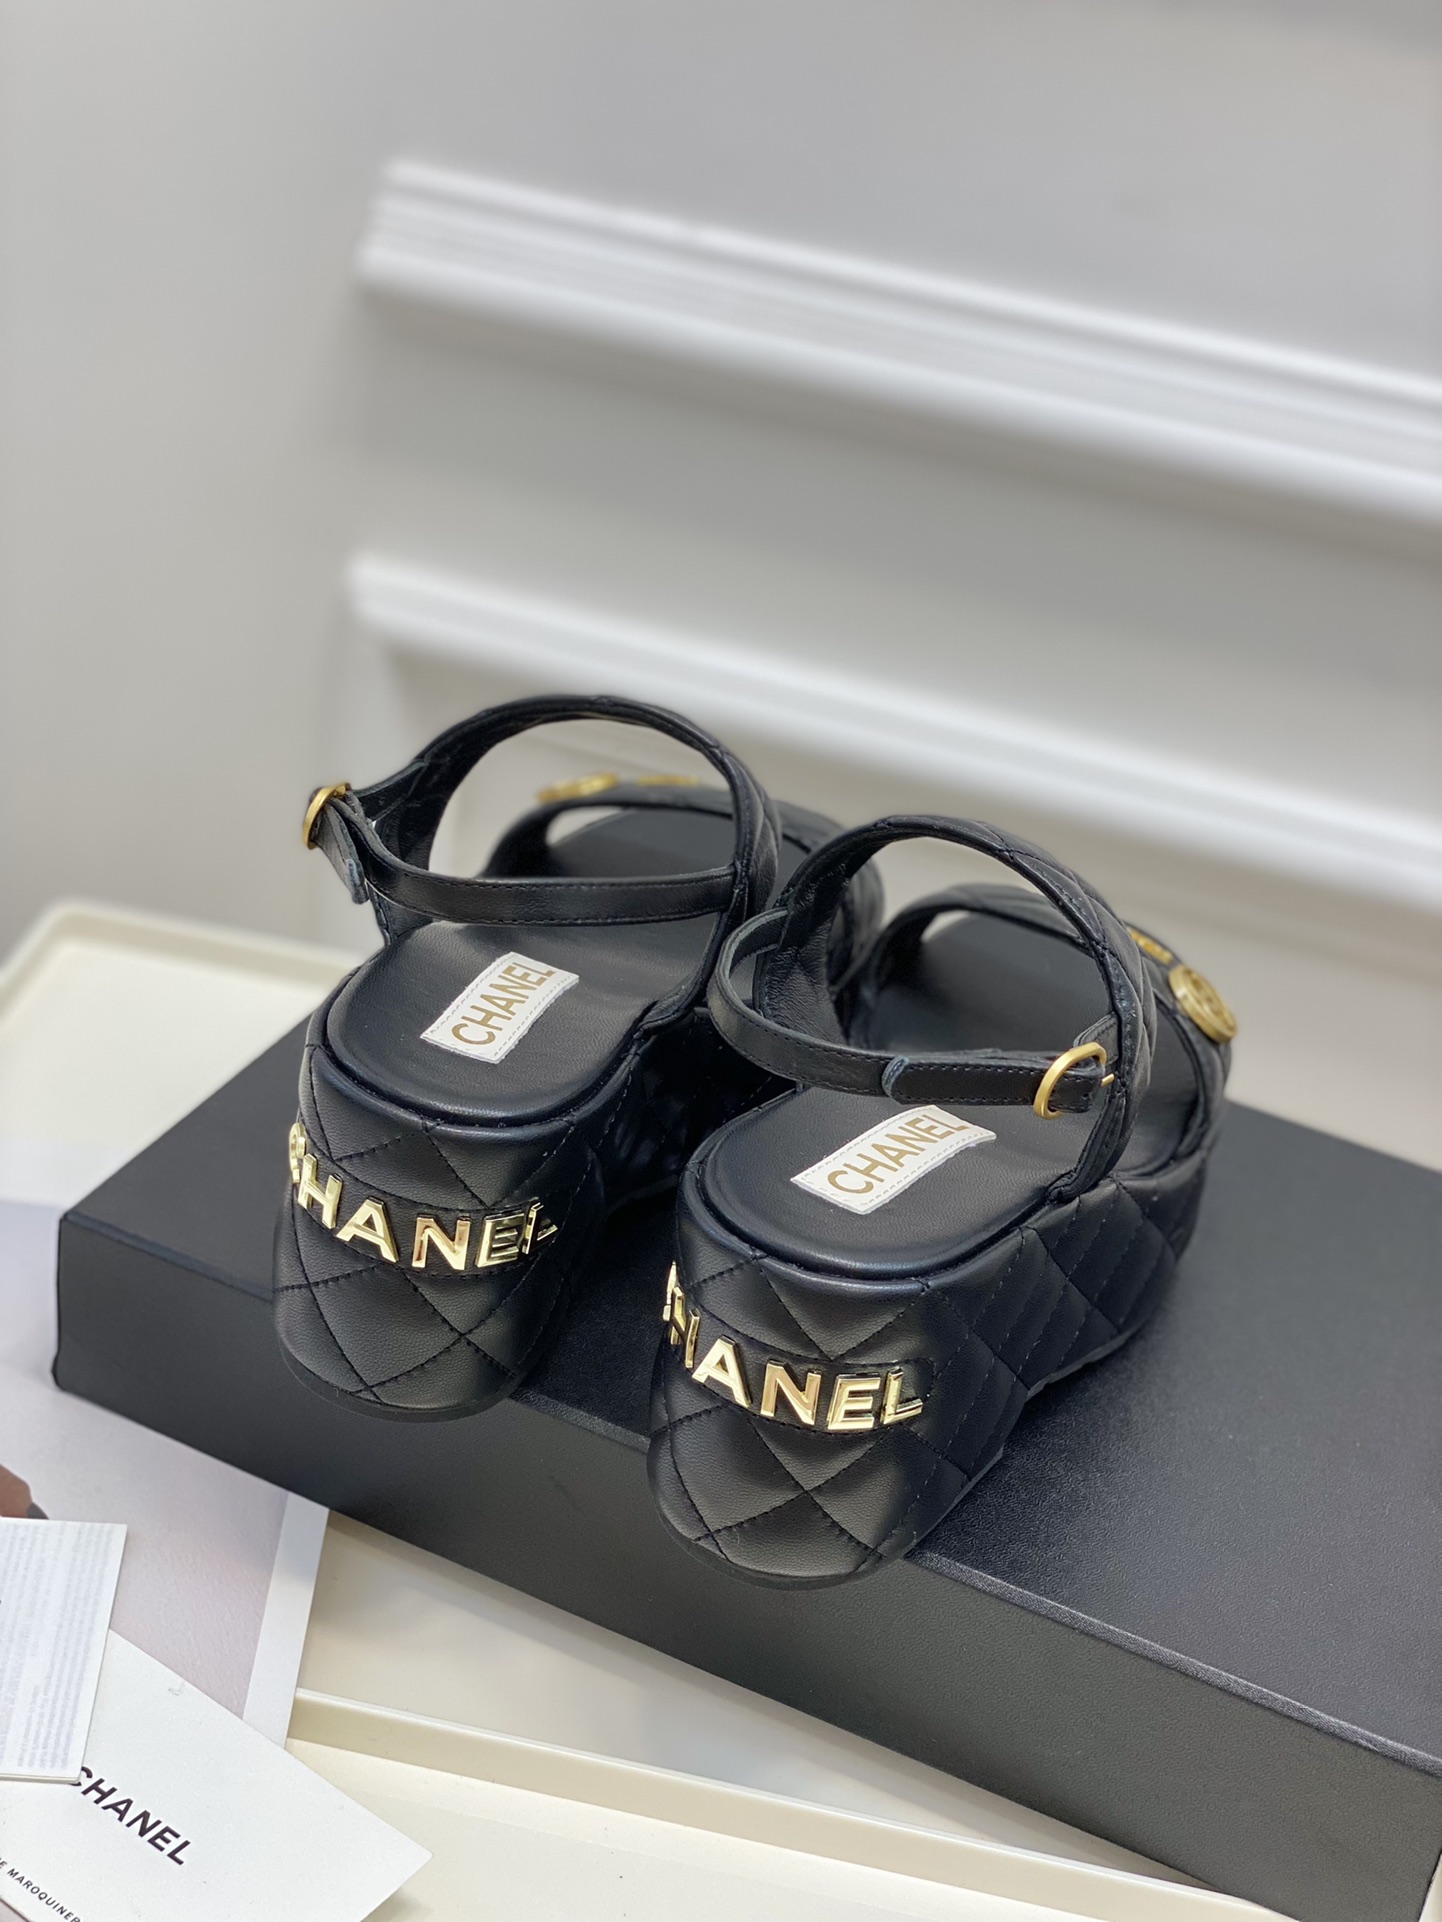 Chanel23新款防水台全系列凉鞋